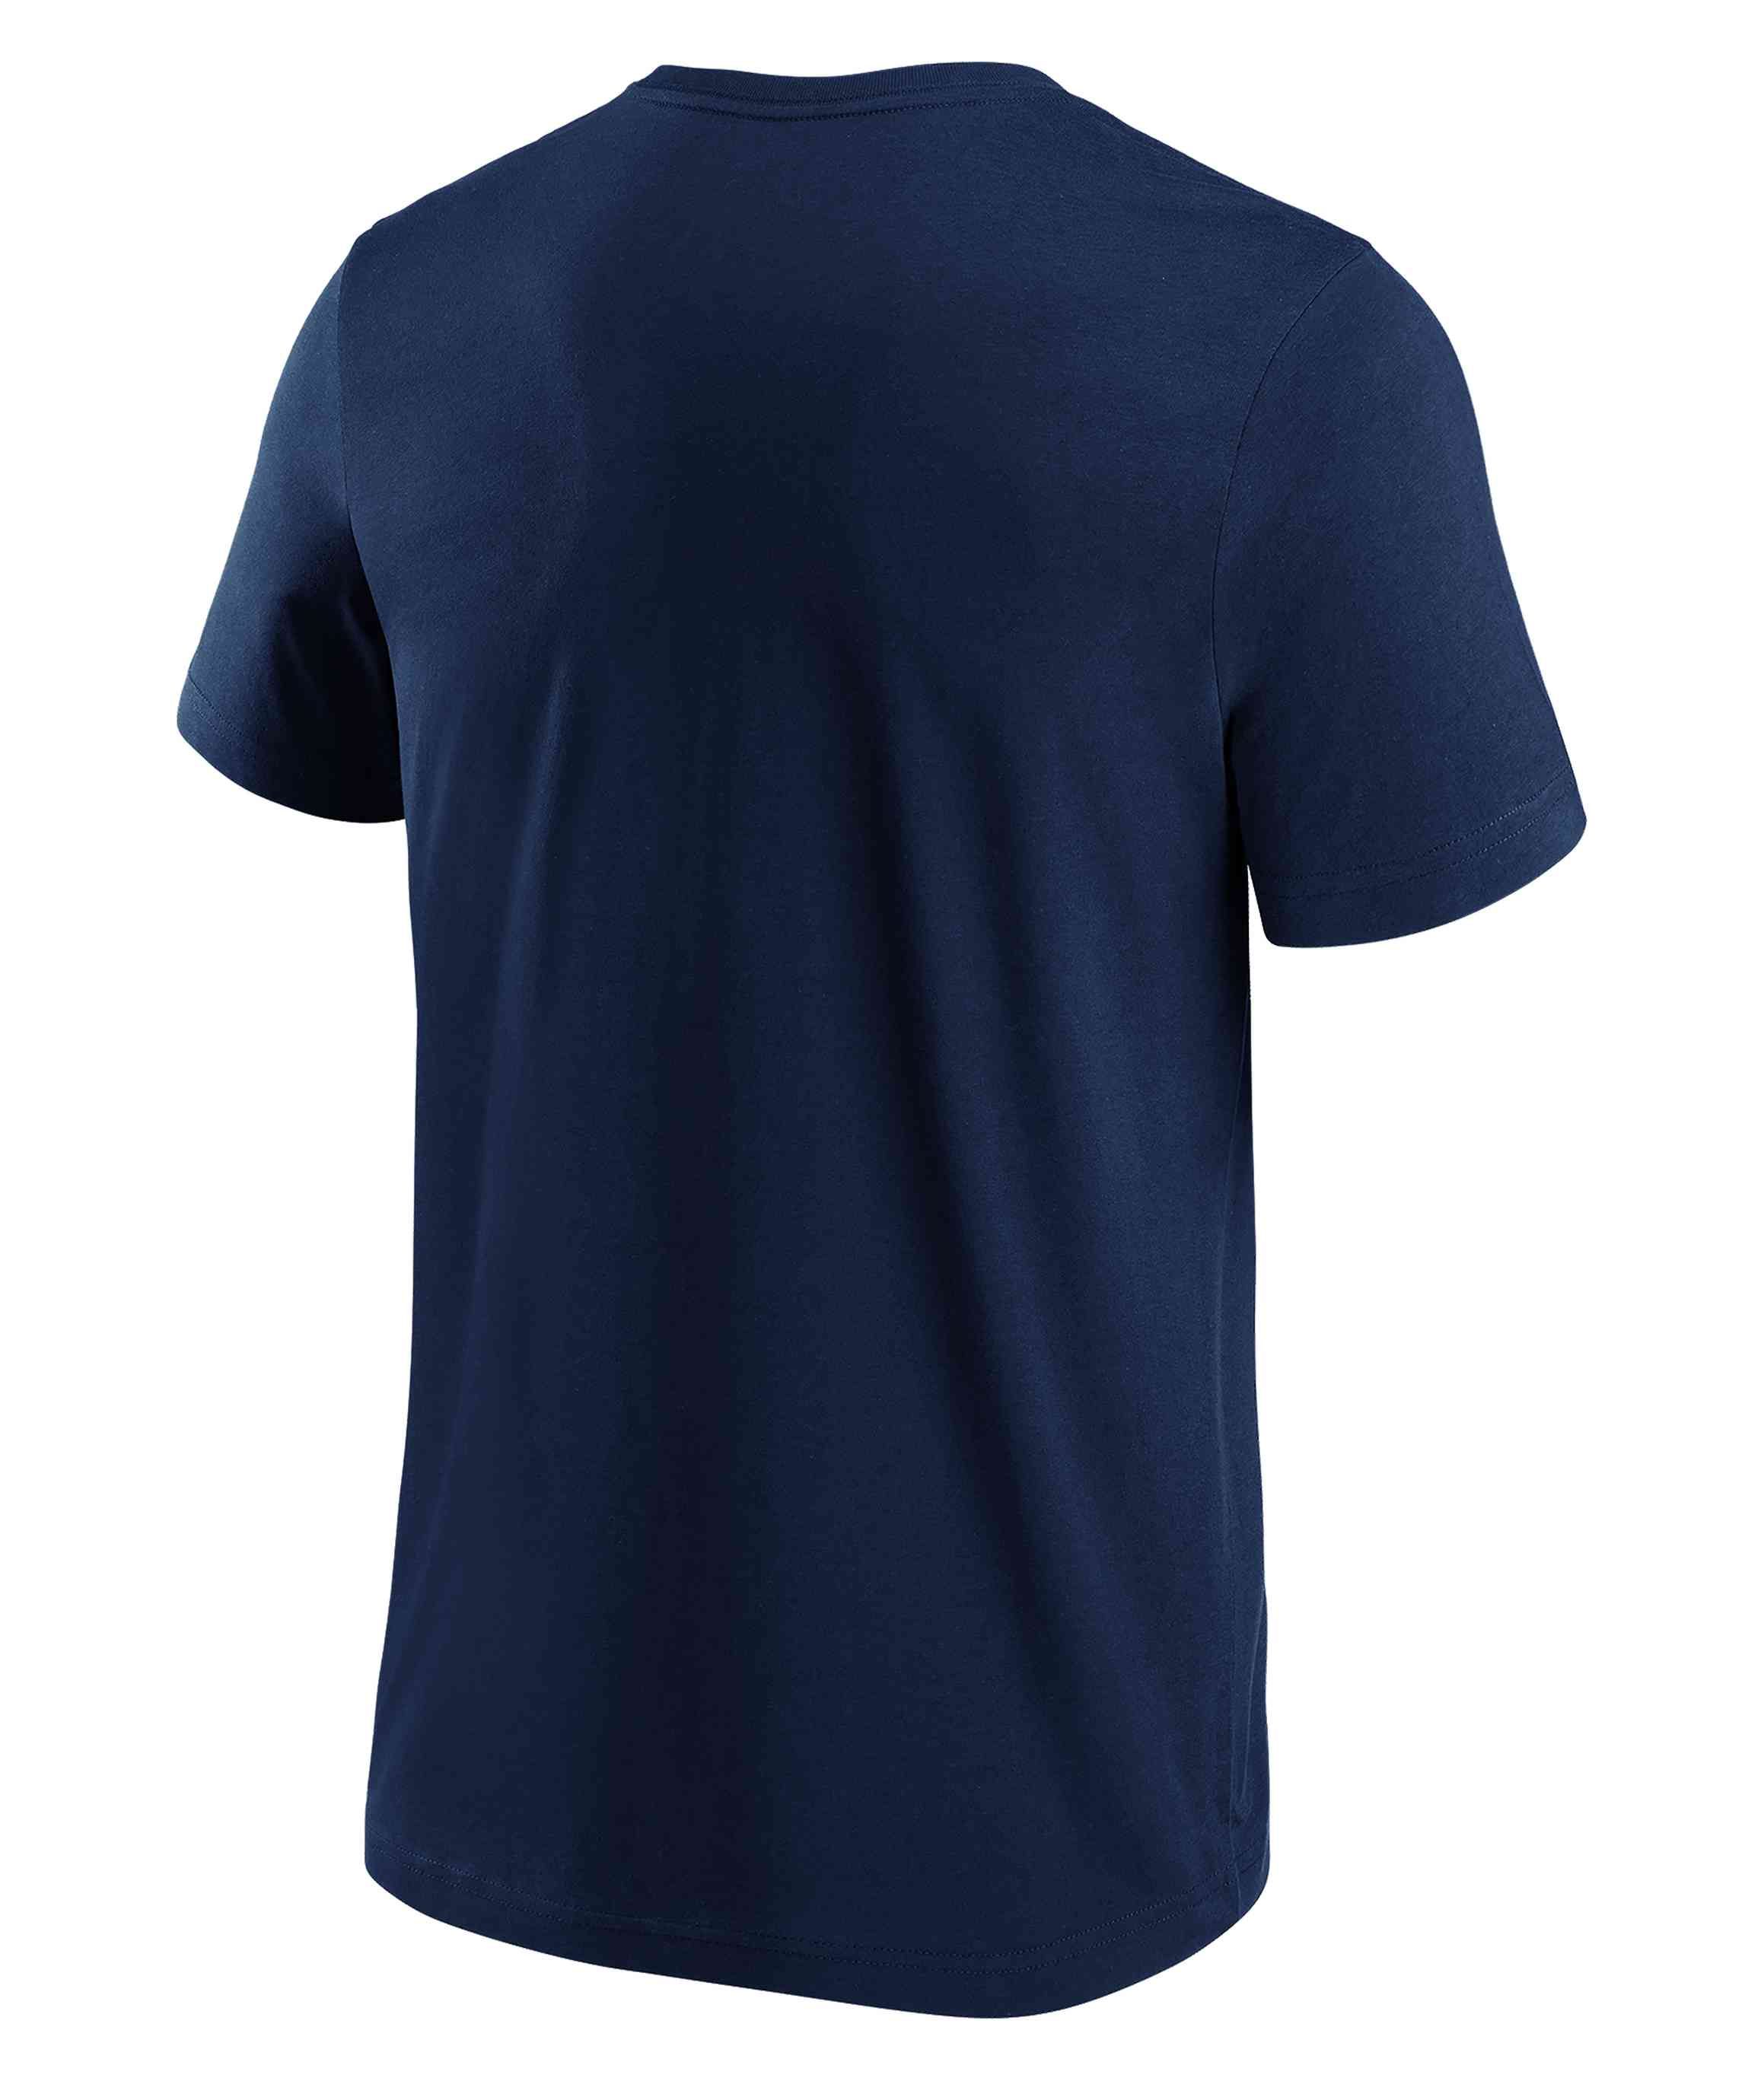 Fanatics - NFL Chicago Bears Primary Logo Graphic T-Shirt